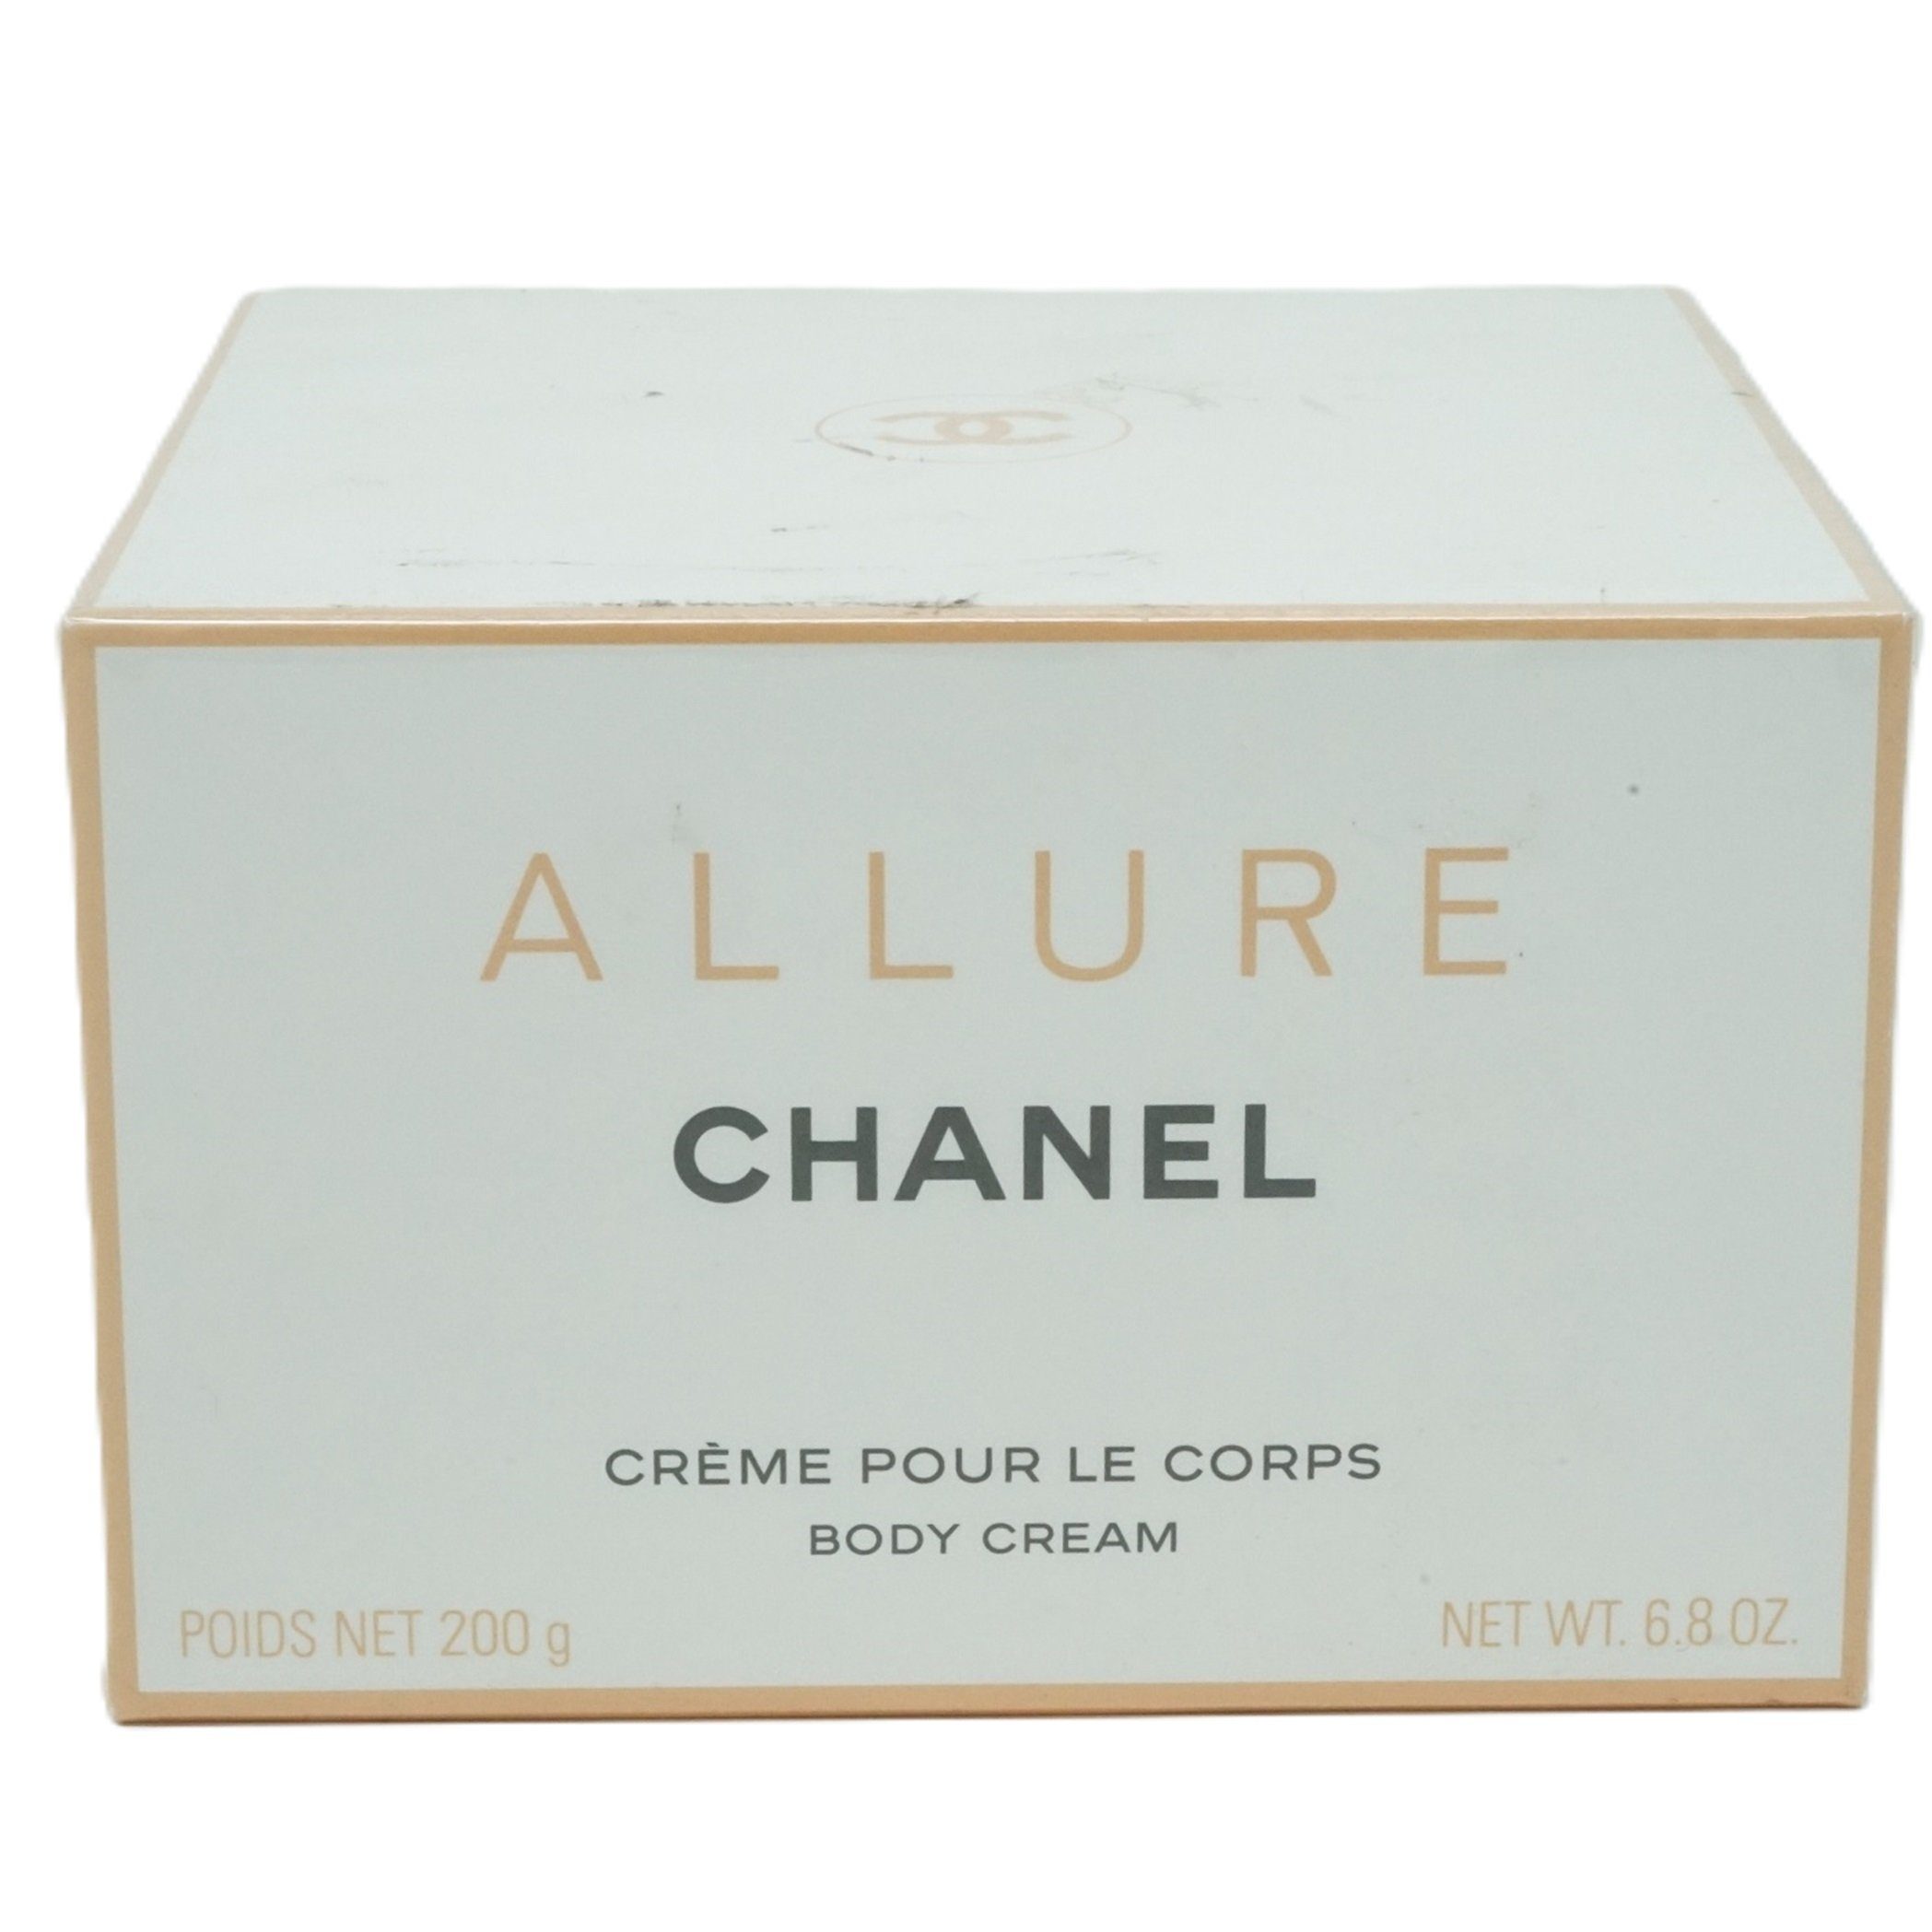 CHANEL Körpercreme Chanel Allure Body Cream / Körpercreme 200g, Chanel